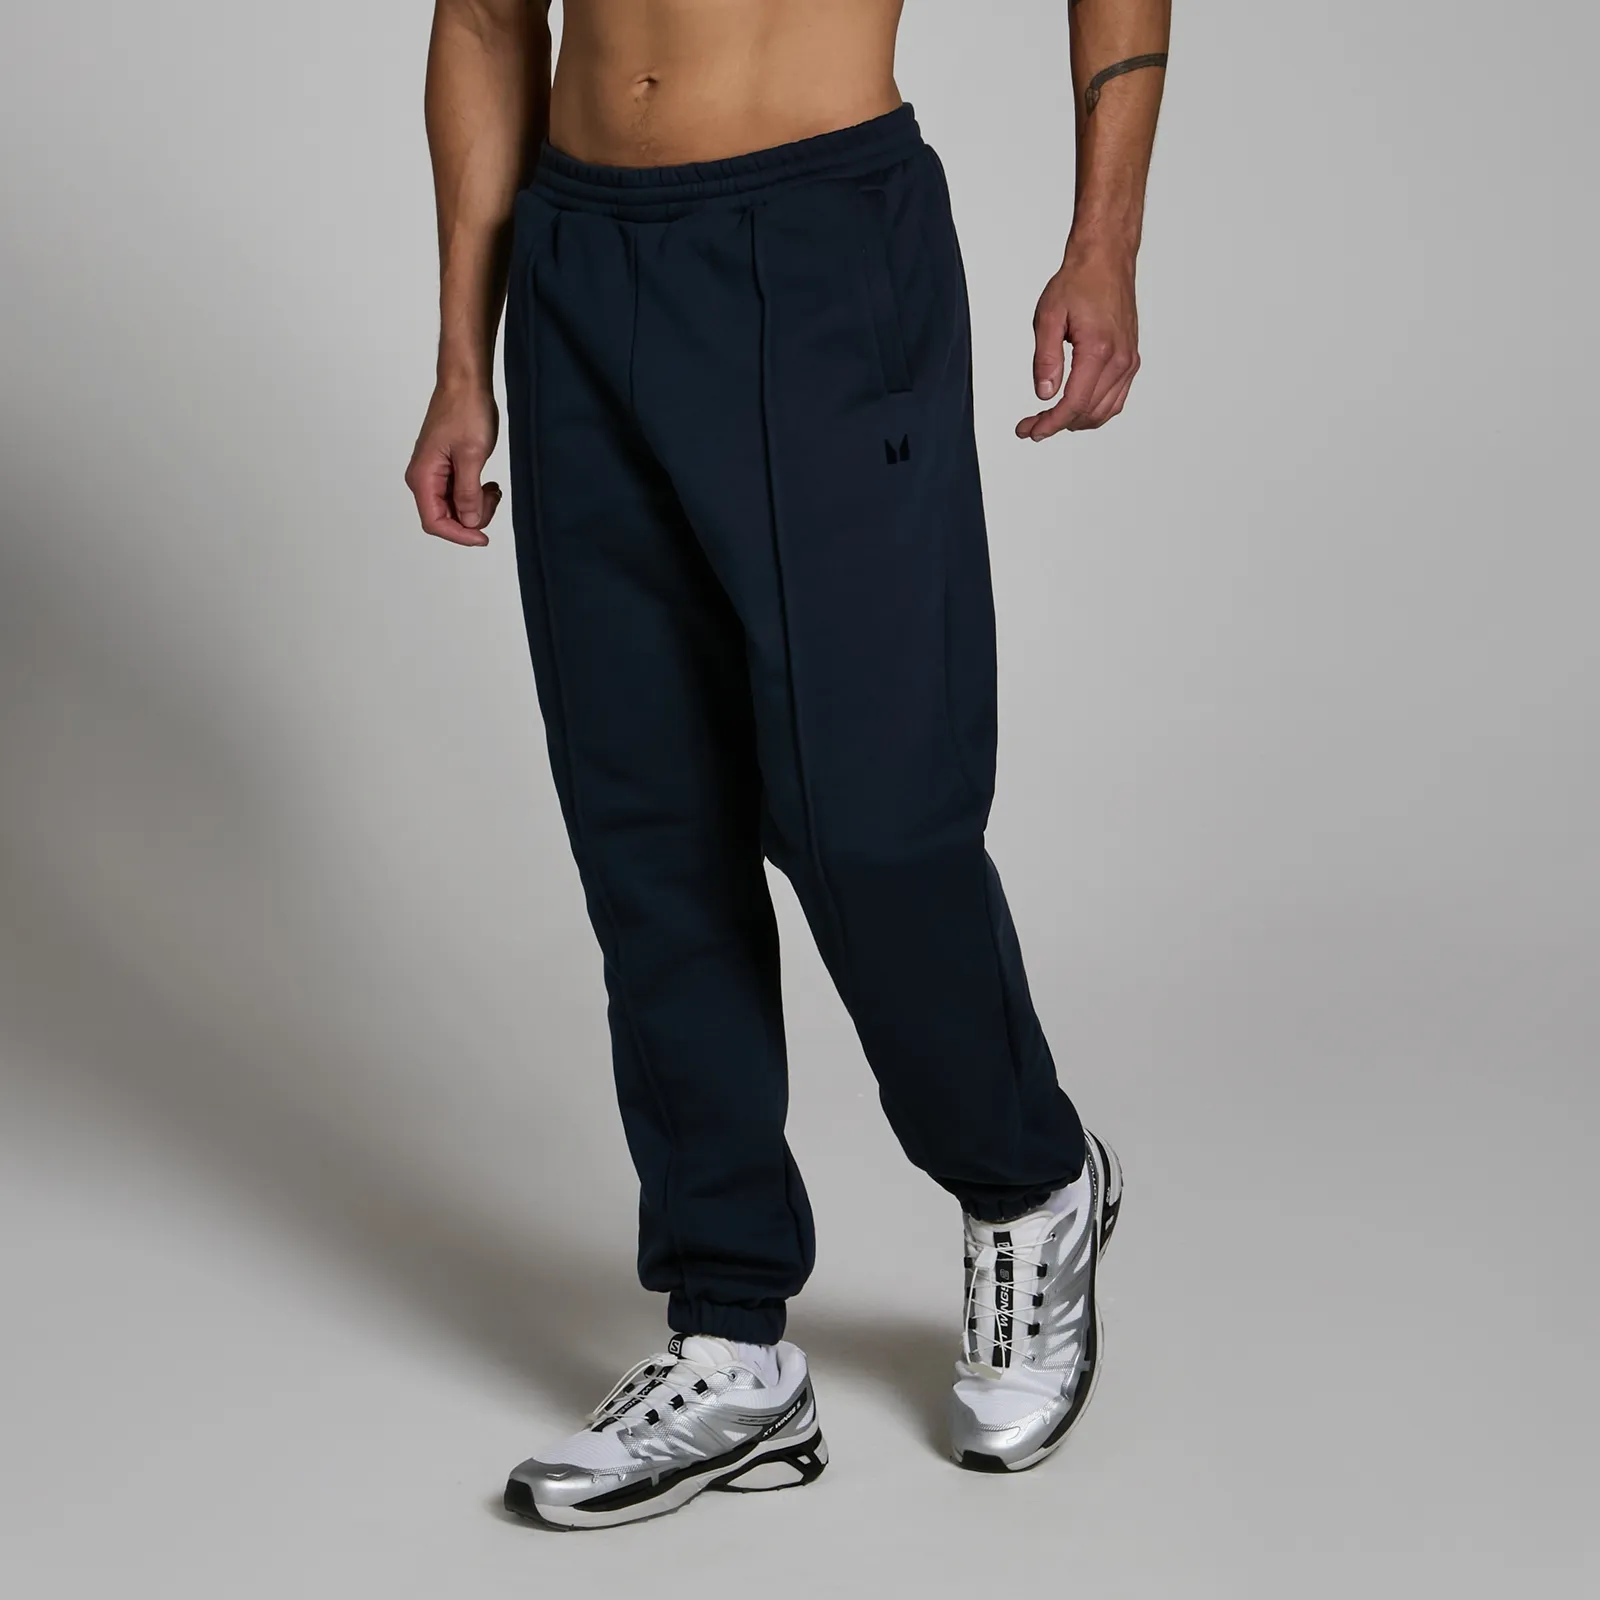 Pantaloni da jogging pesanti oversize  Lifestyle da uomo - Blu navy scuro - M